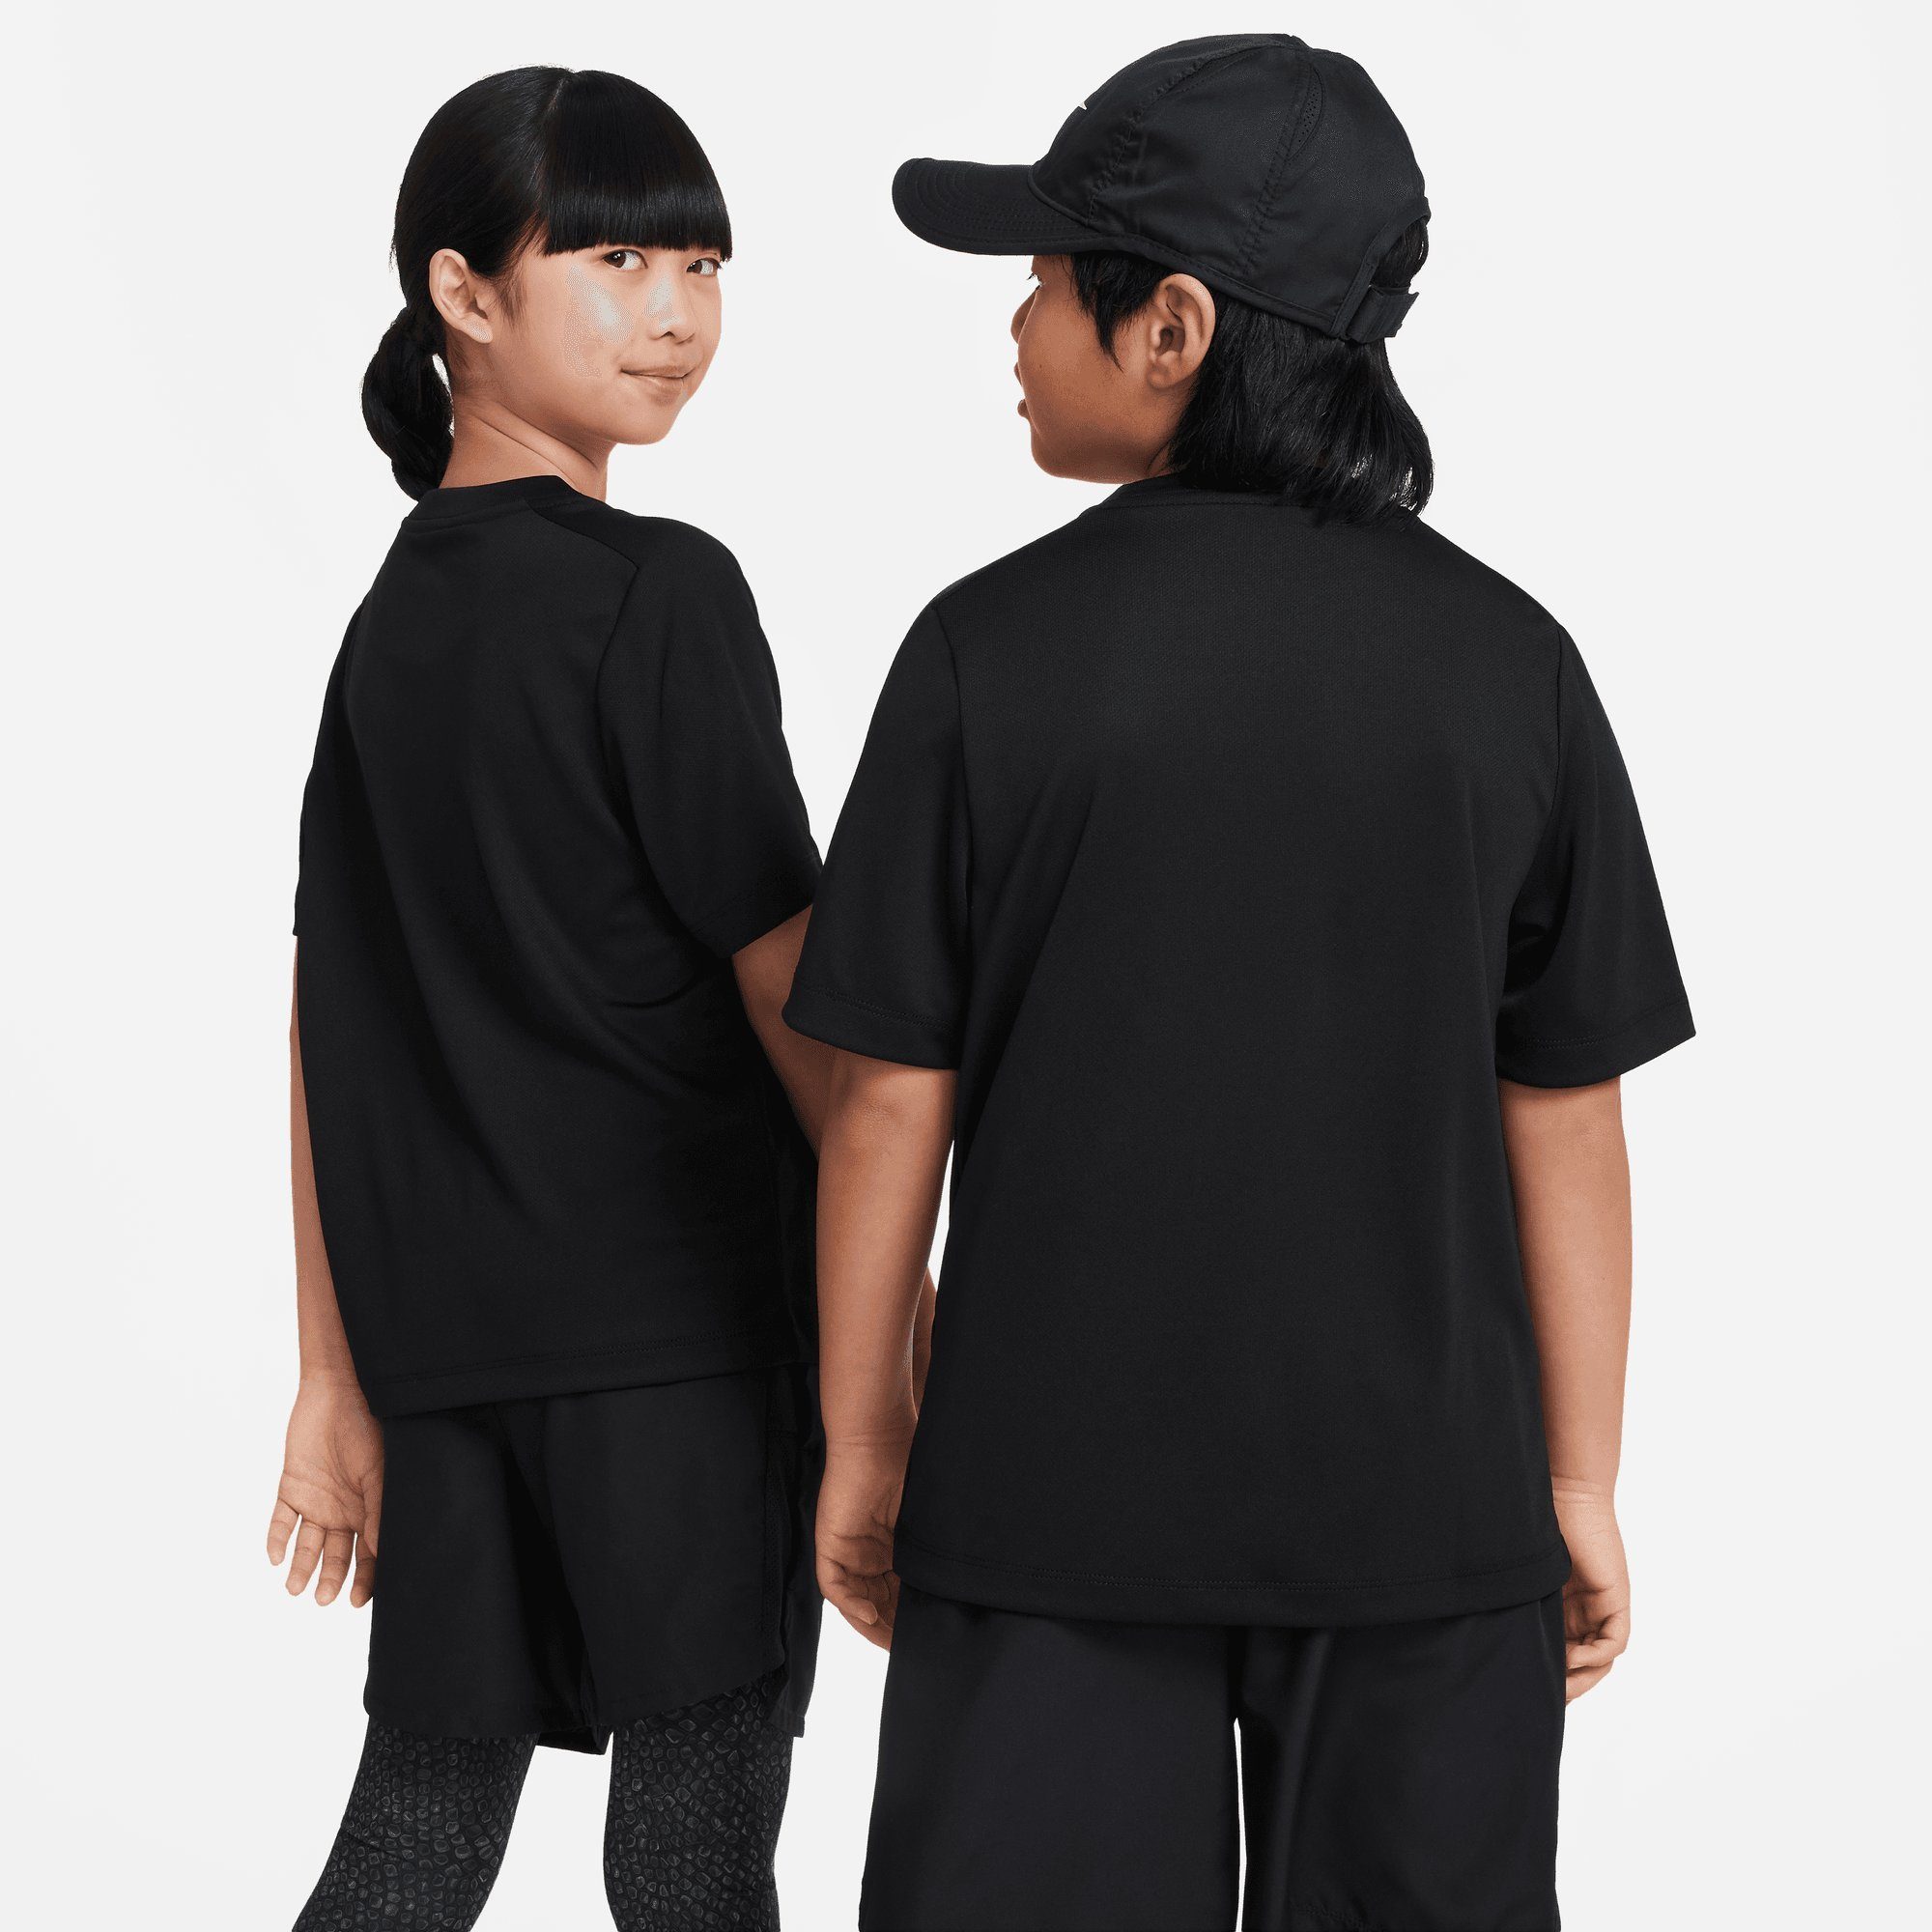 Nike (BOYS) TOP MULTI+ KIDS' Trainingsshirt DRI-FIT BLACK/WHITE TRAINING BIG